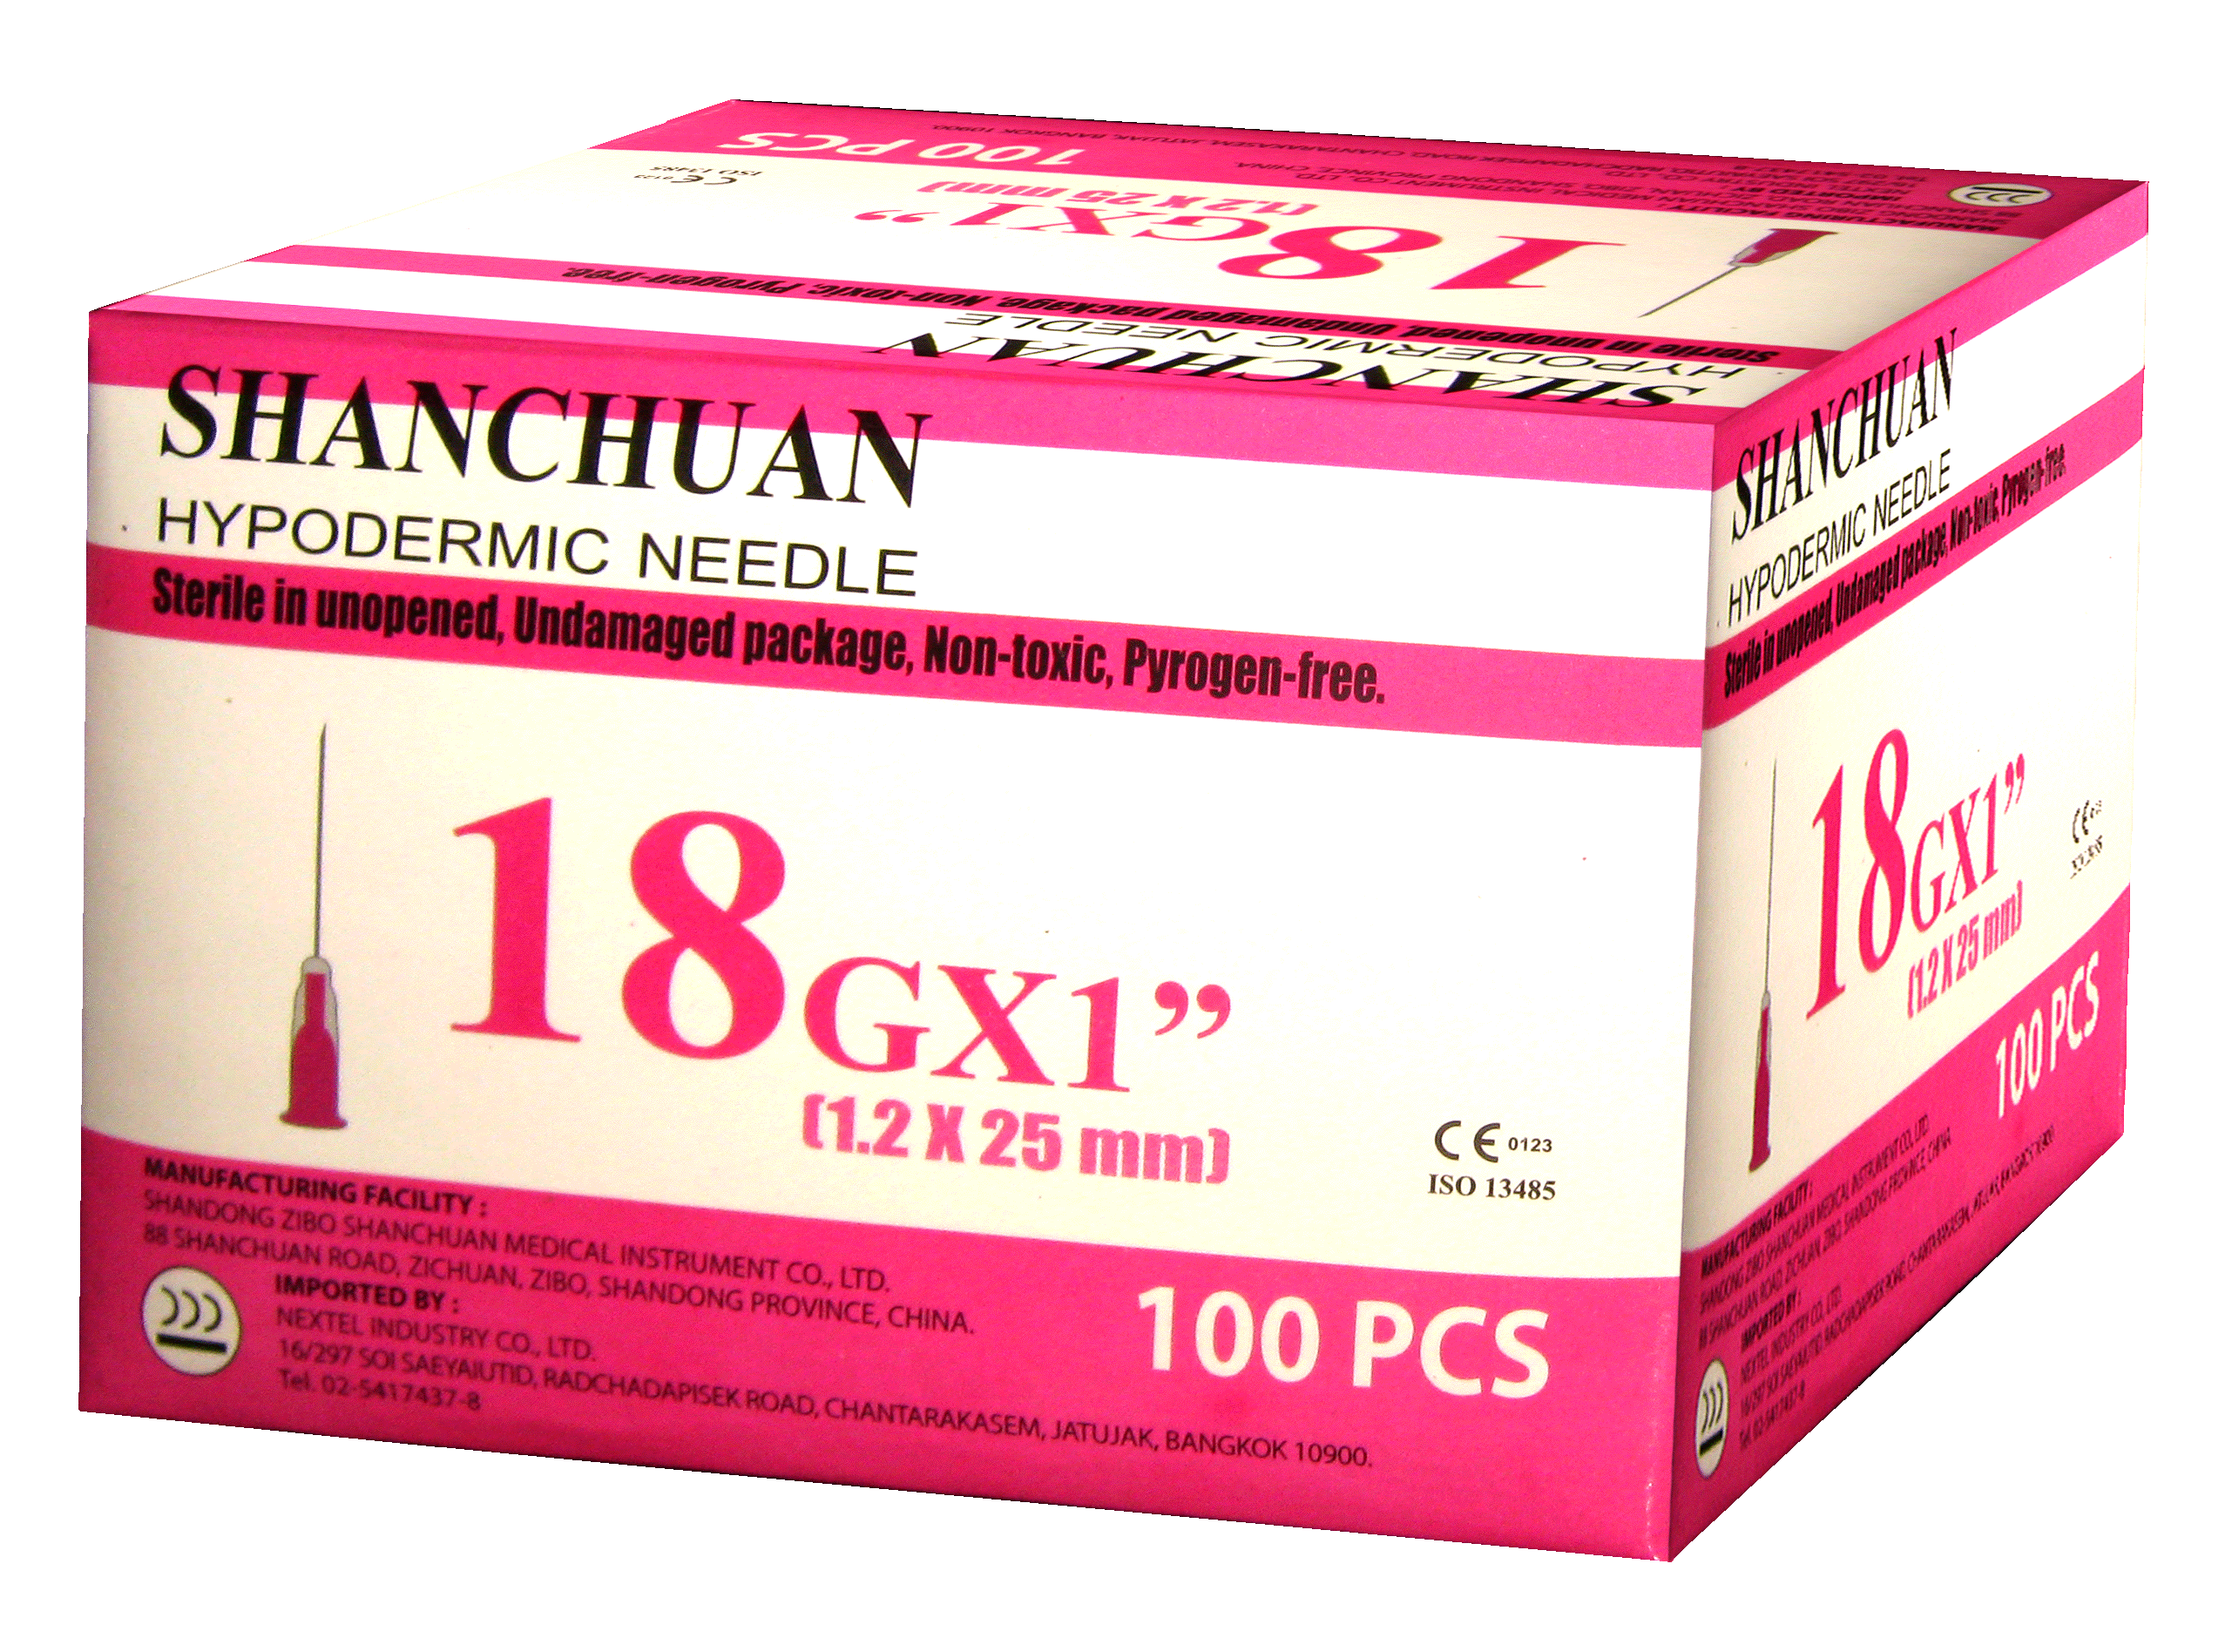 SHANCHUAN (ซานชวน) เข็มฉีดยาพลาสติก เบอร์ 18Gx1" nextelindustry.com